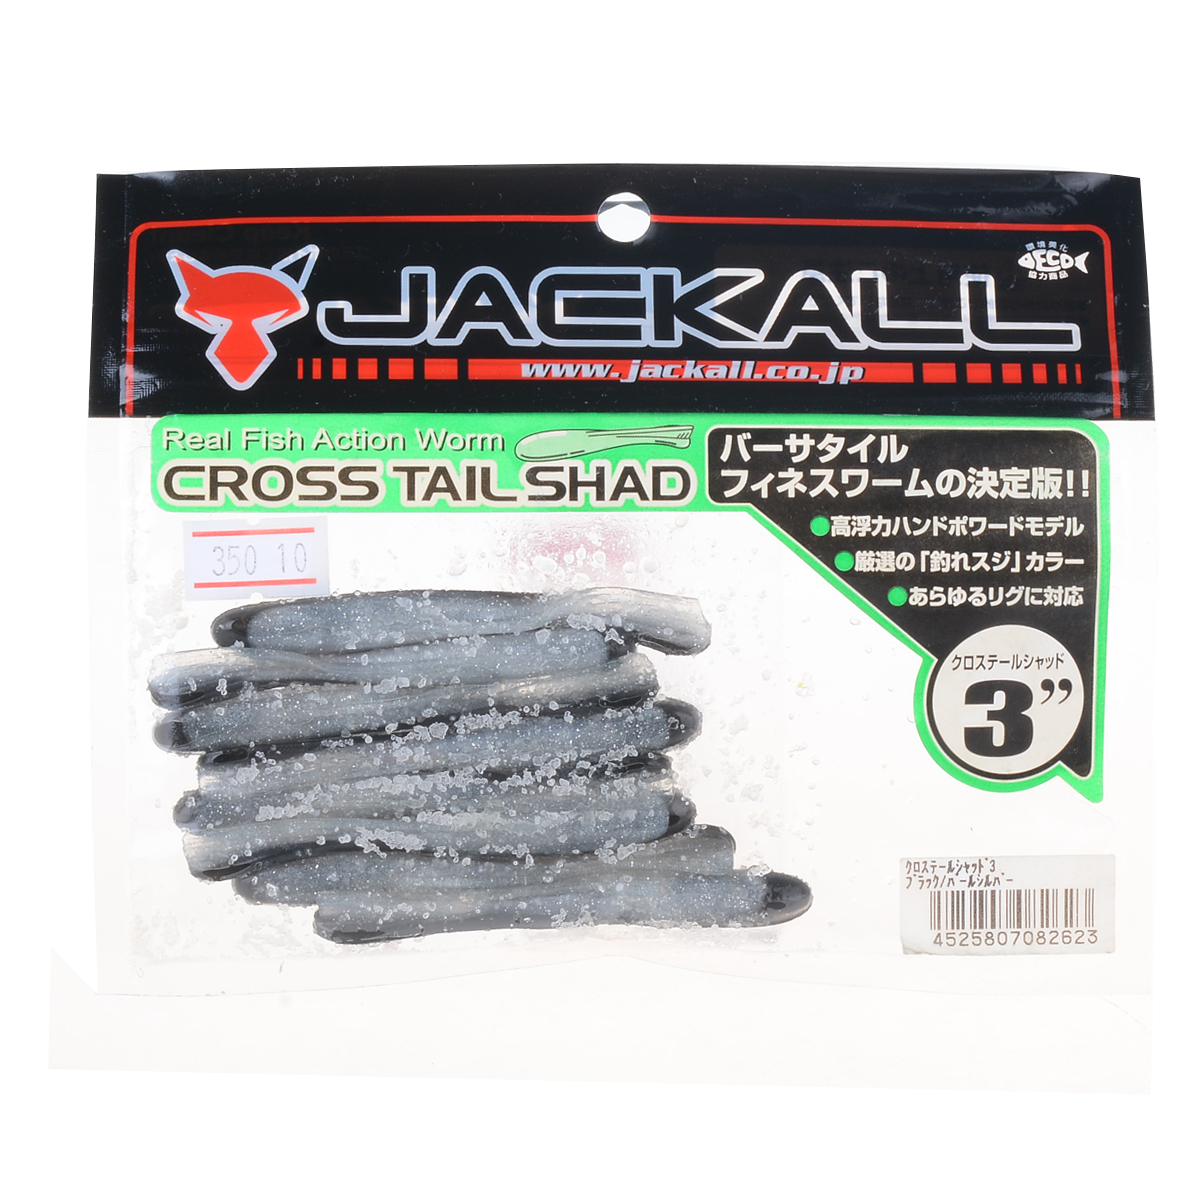 Jackall Cross Tail Shad 3 #2623*เหยื่อหนอนยาง - 7 SEAS PROSHOP